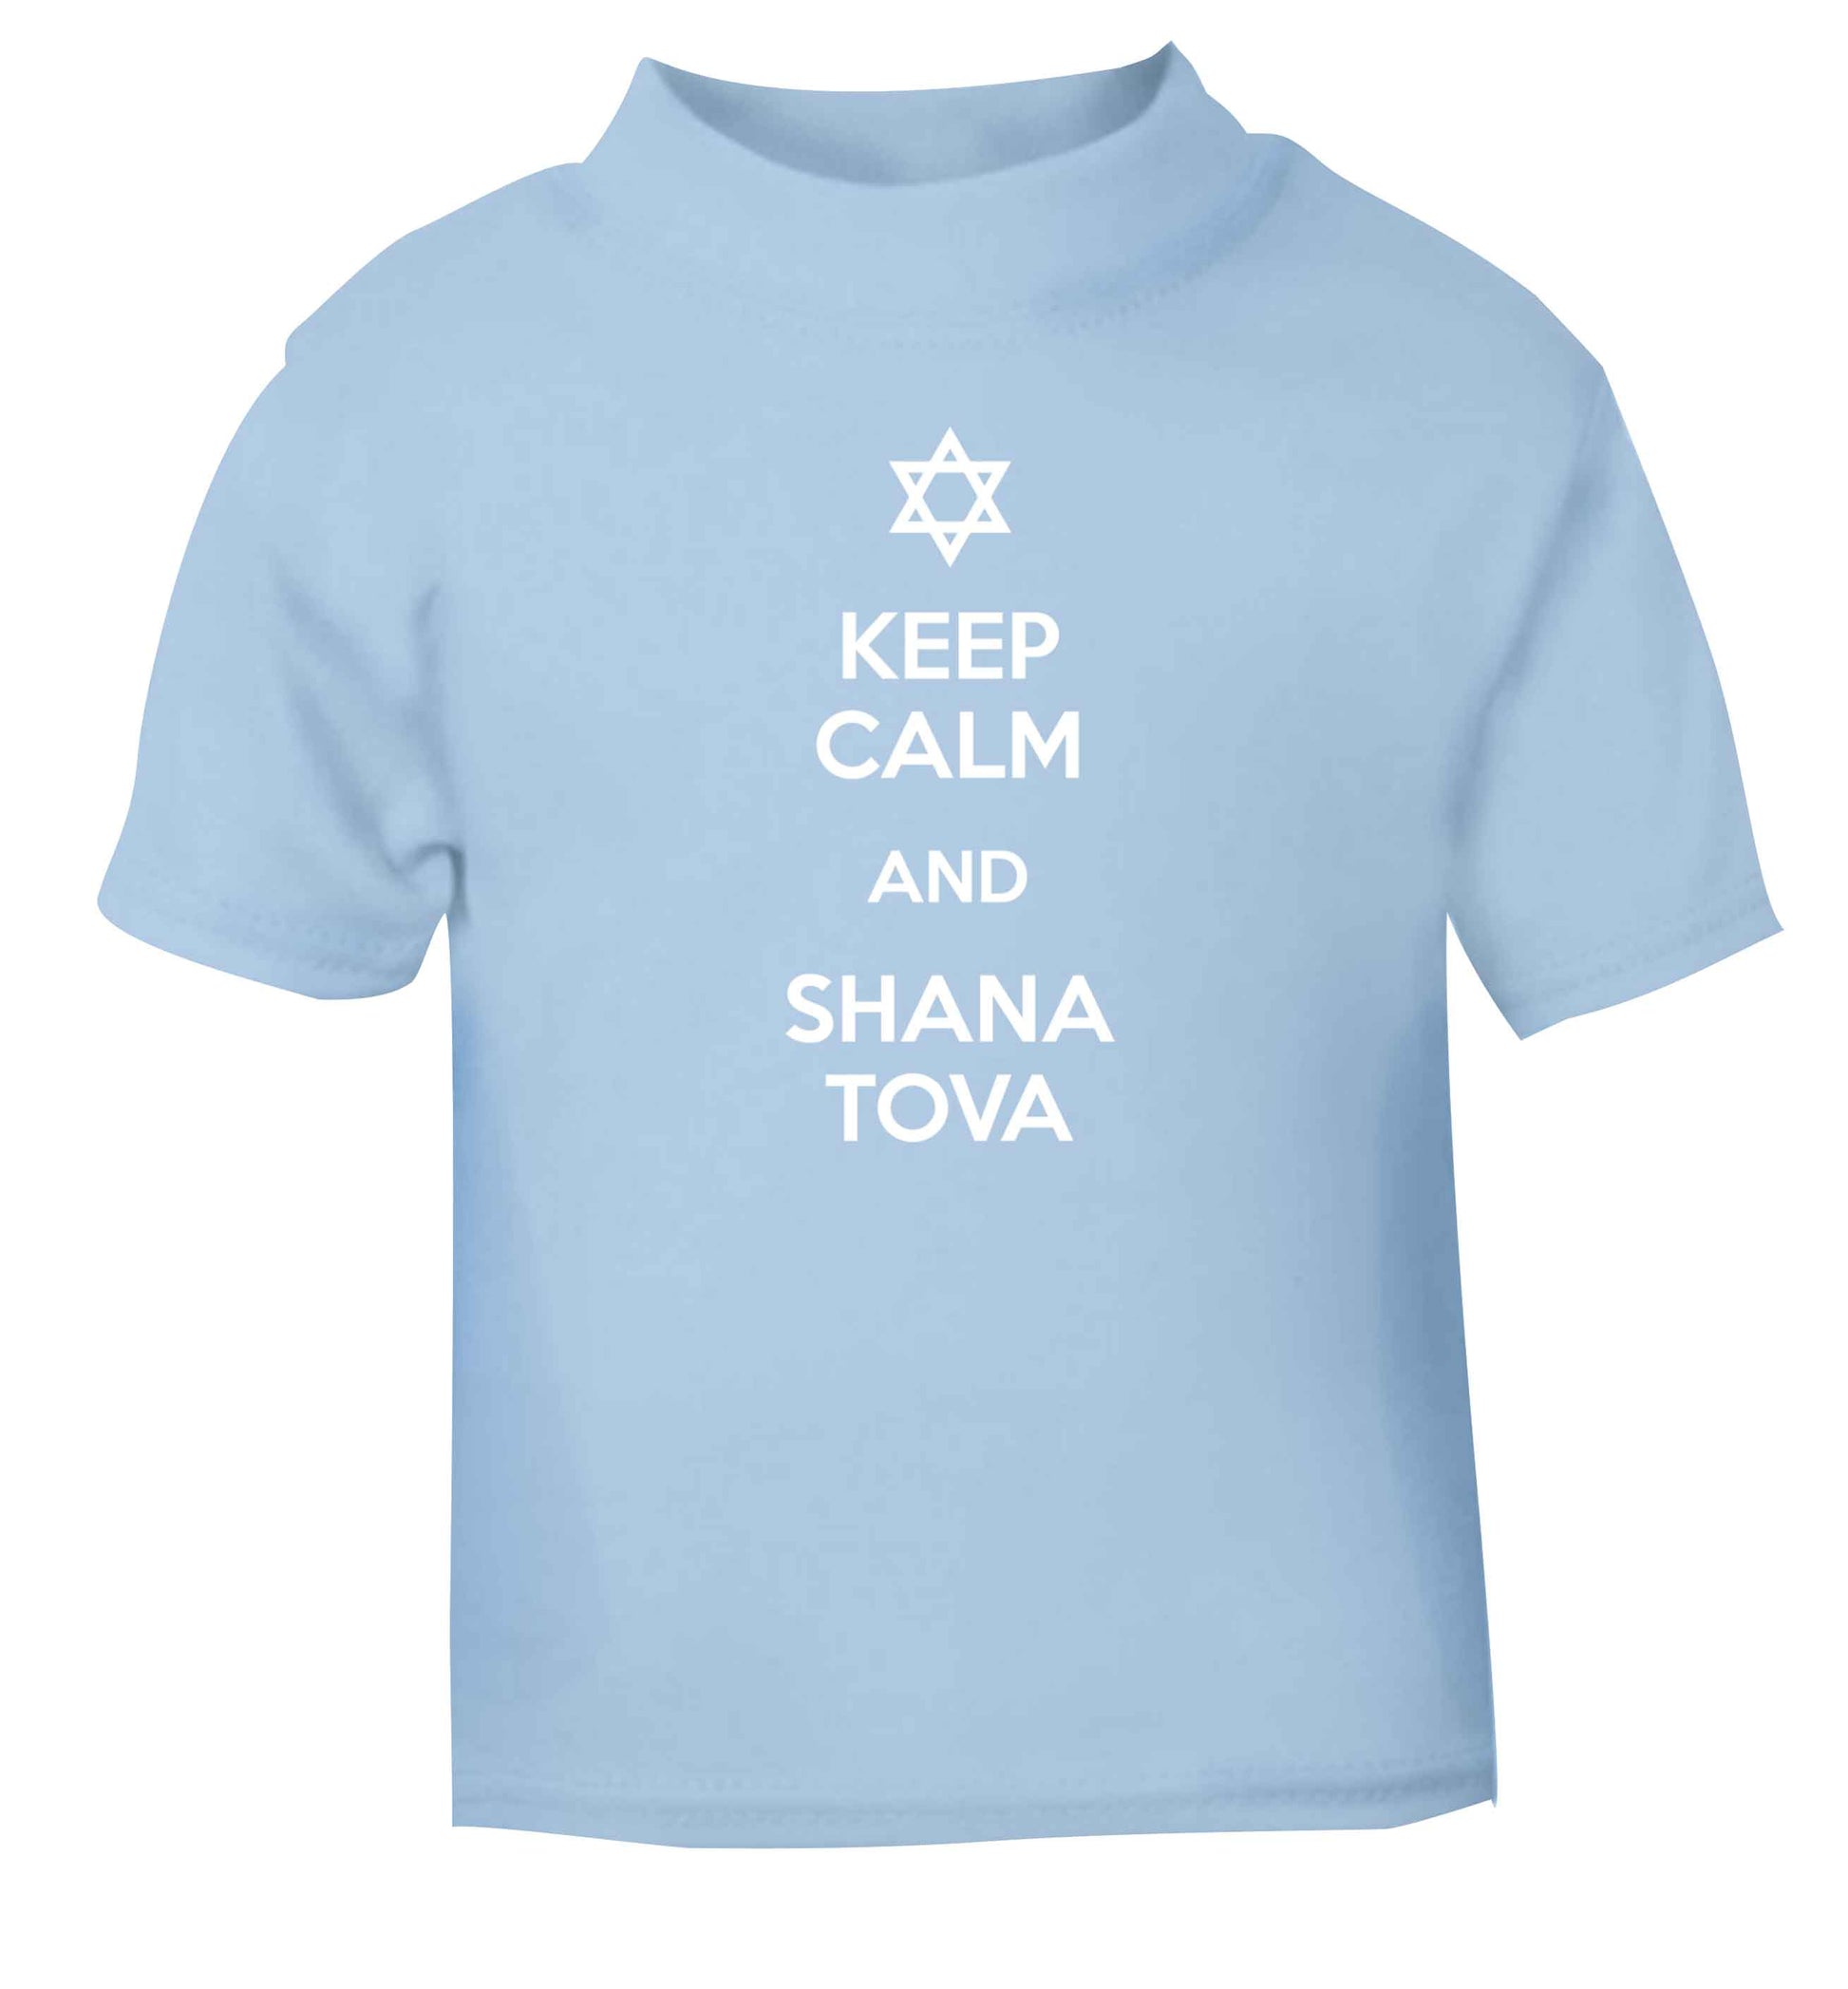 Keep calm and shana tova light blue Baby Toddler Tshirt 2 Years